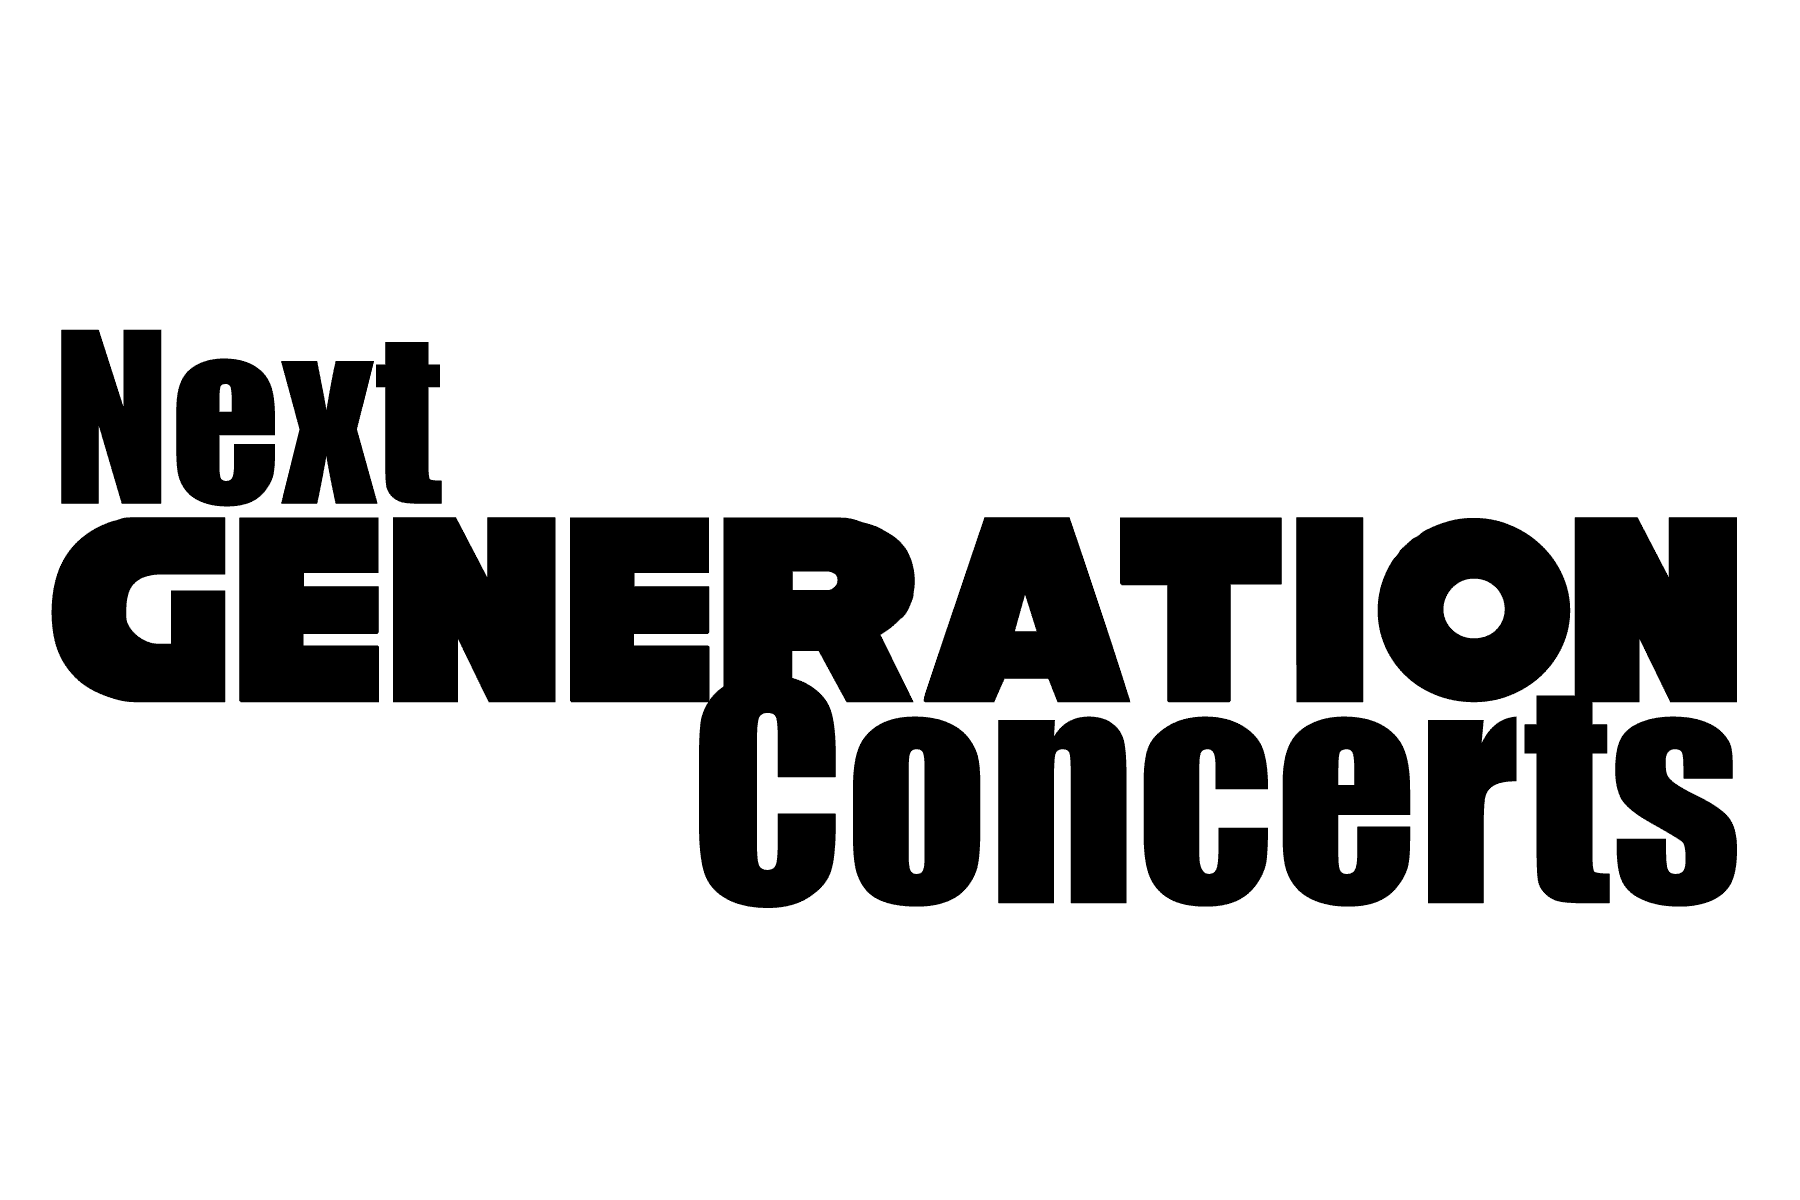 Next Generation Concerts